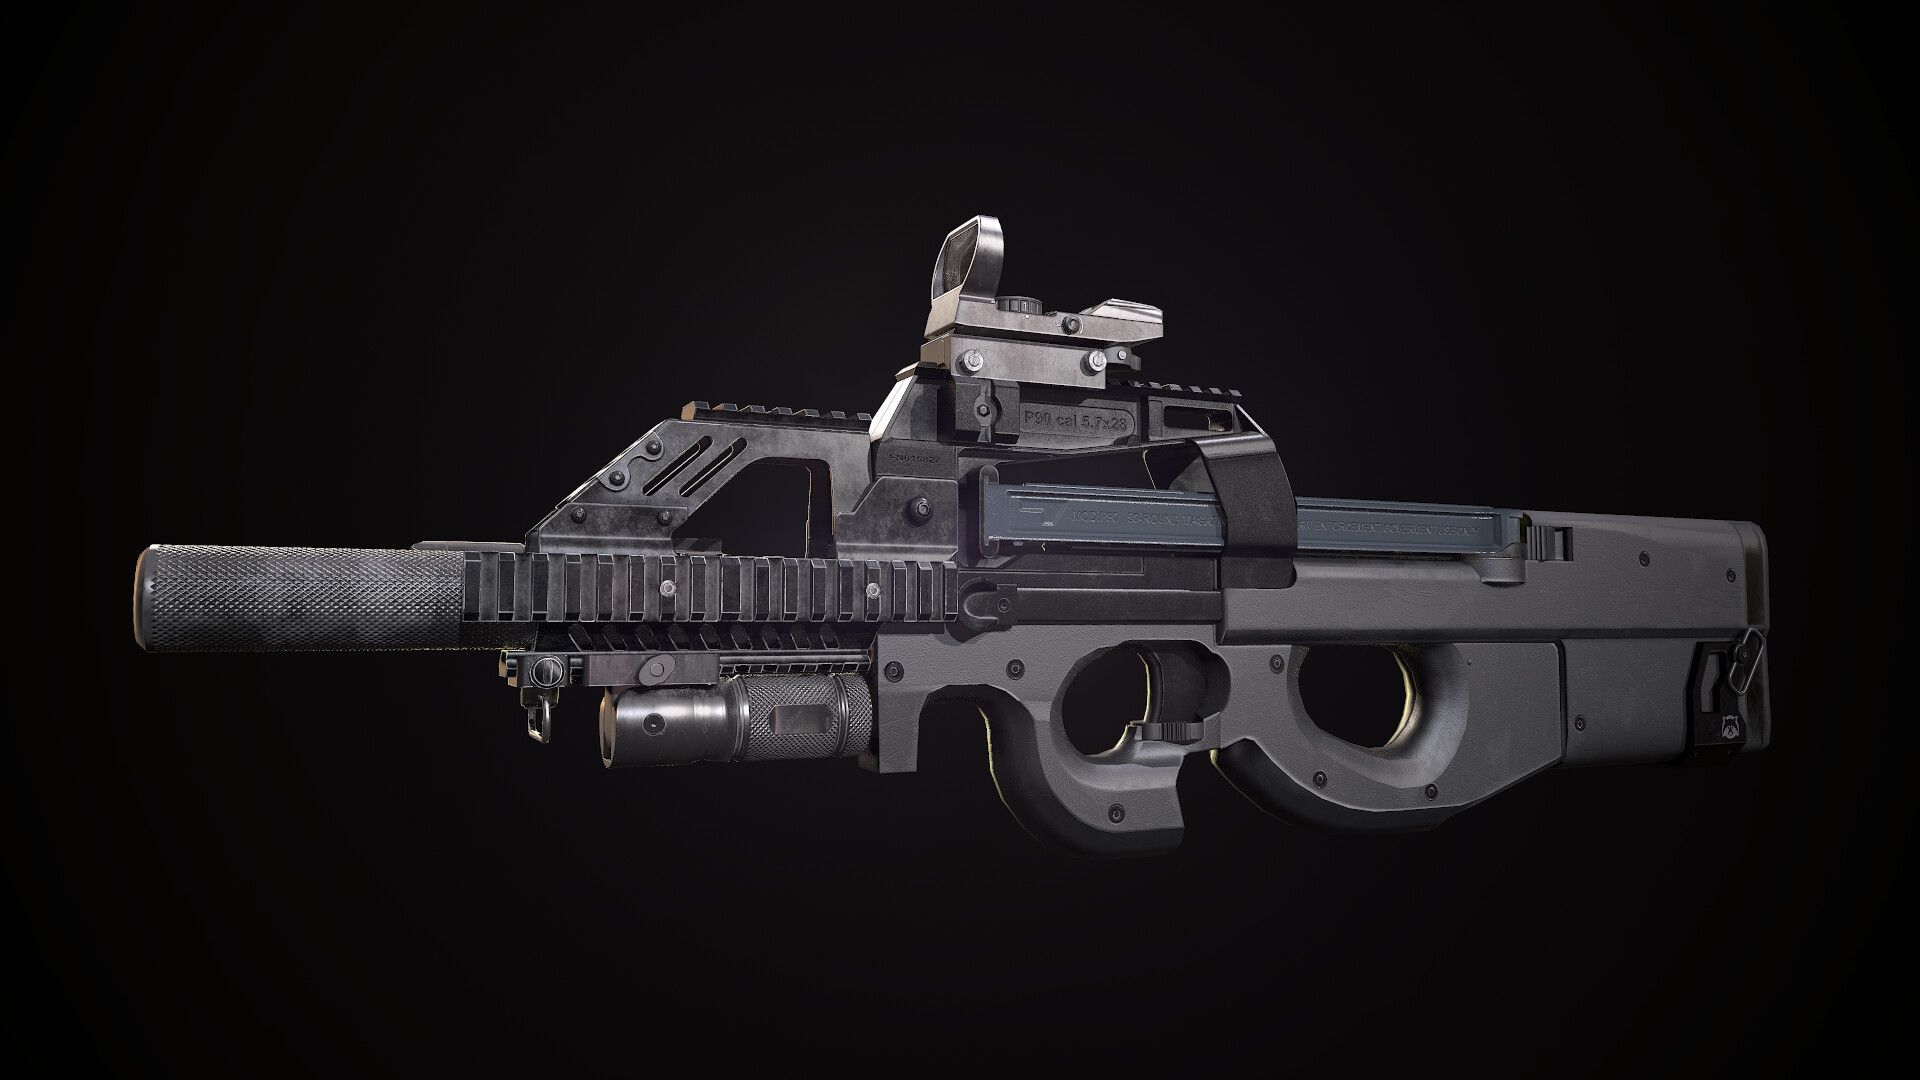 submachine gun p90